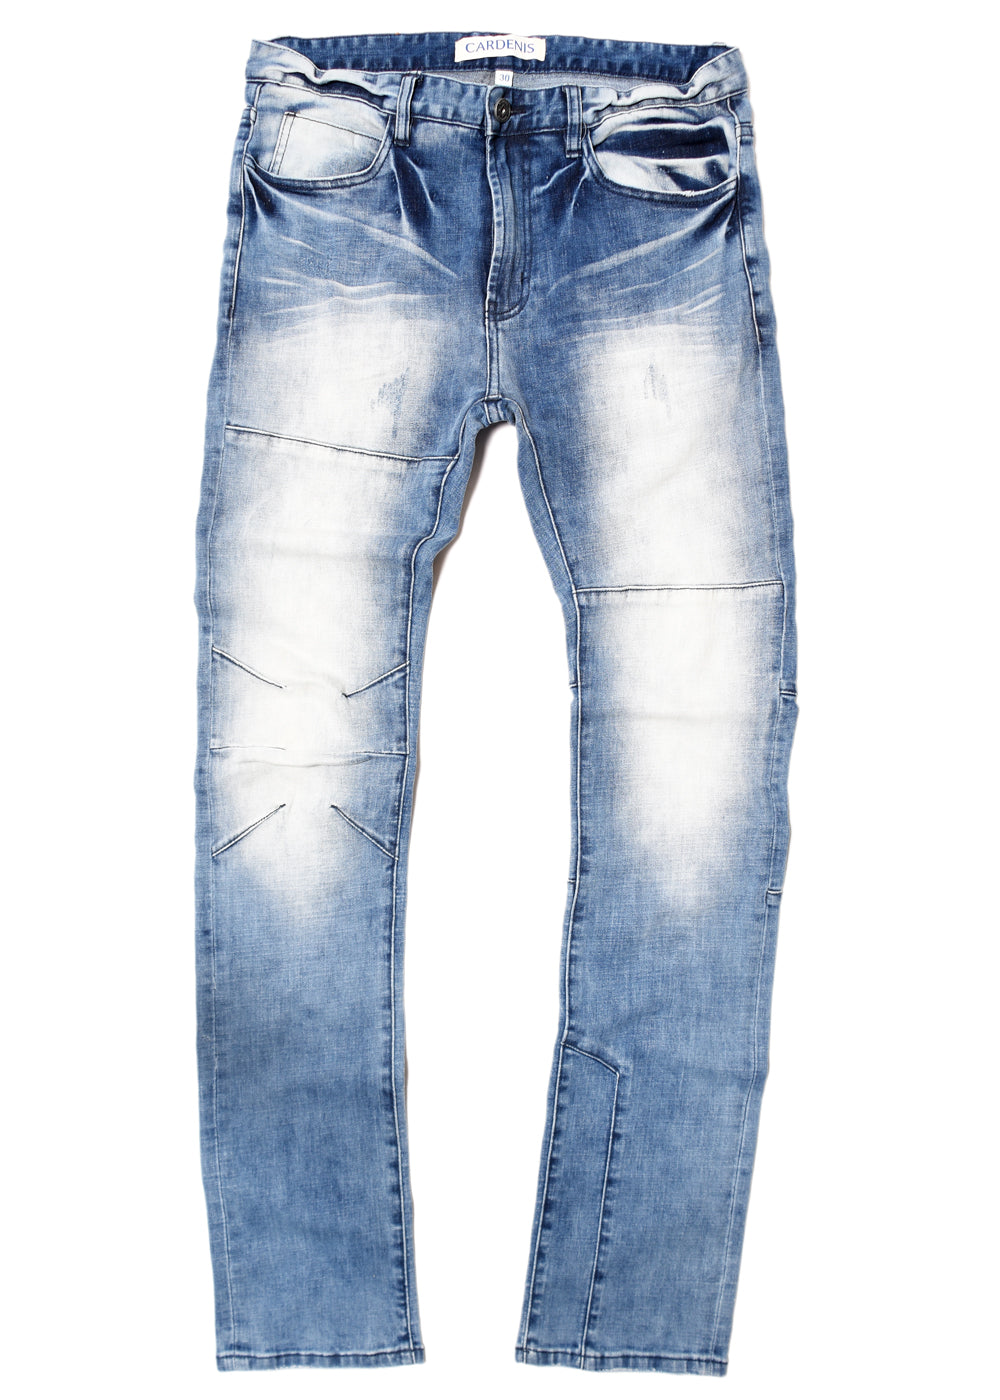 Made By History Sandblast Jeans By Cardenis – Cardenis Denim